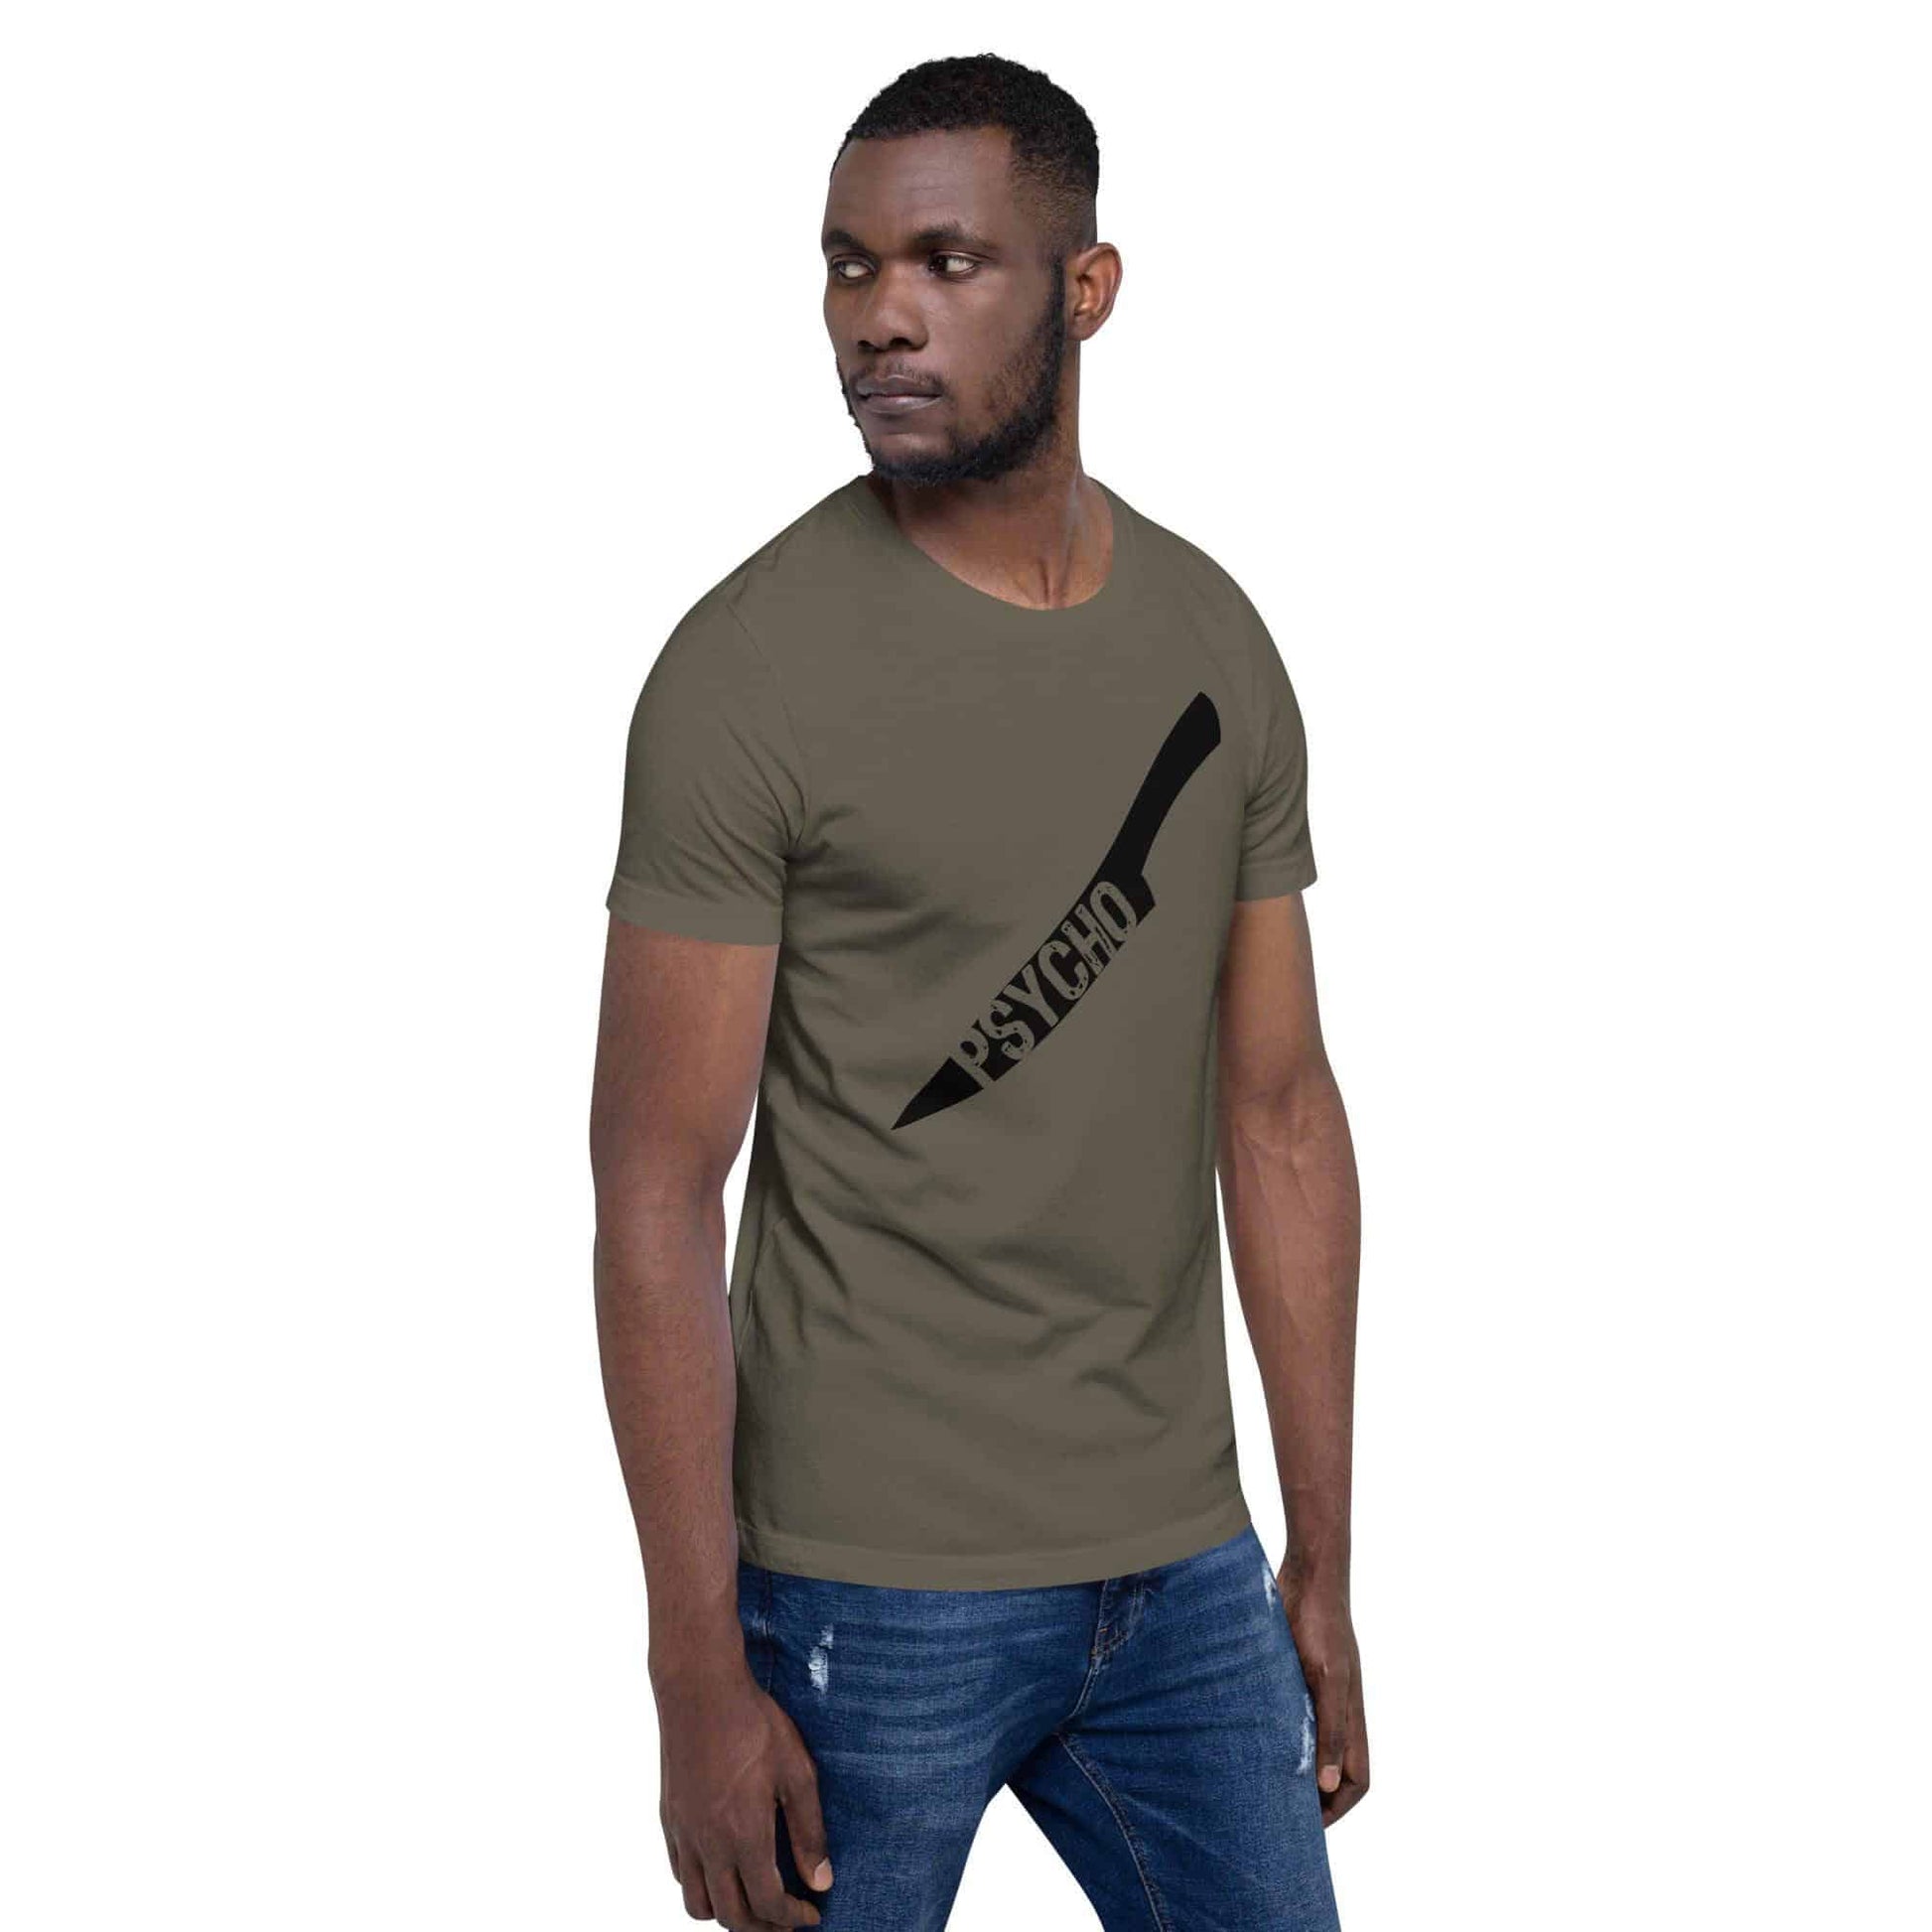 Scar Design T shirt Army / S Psycho Horror T-shirt